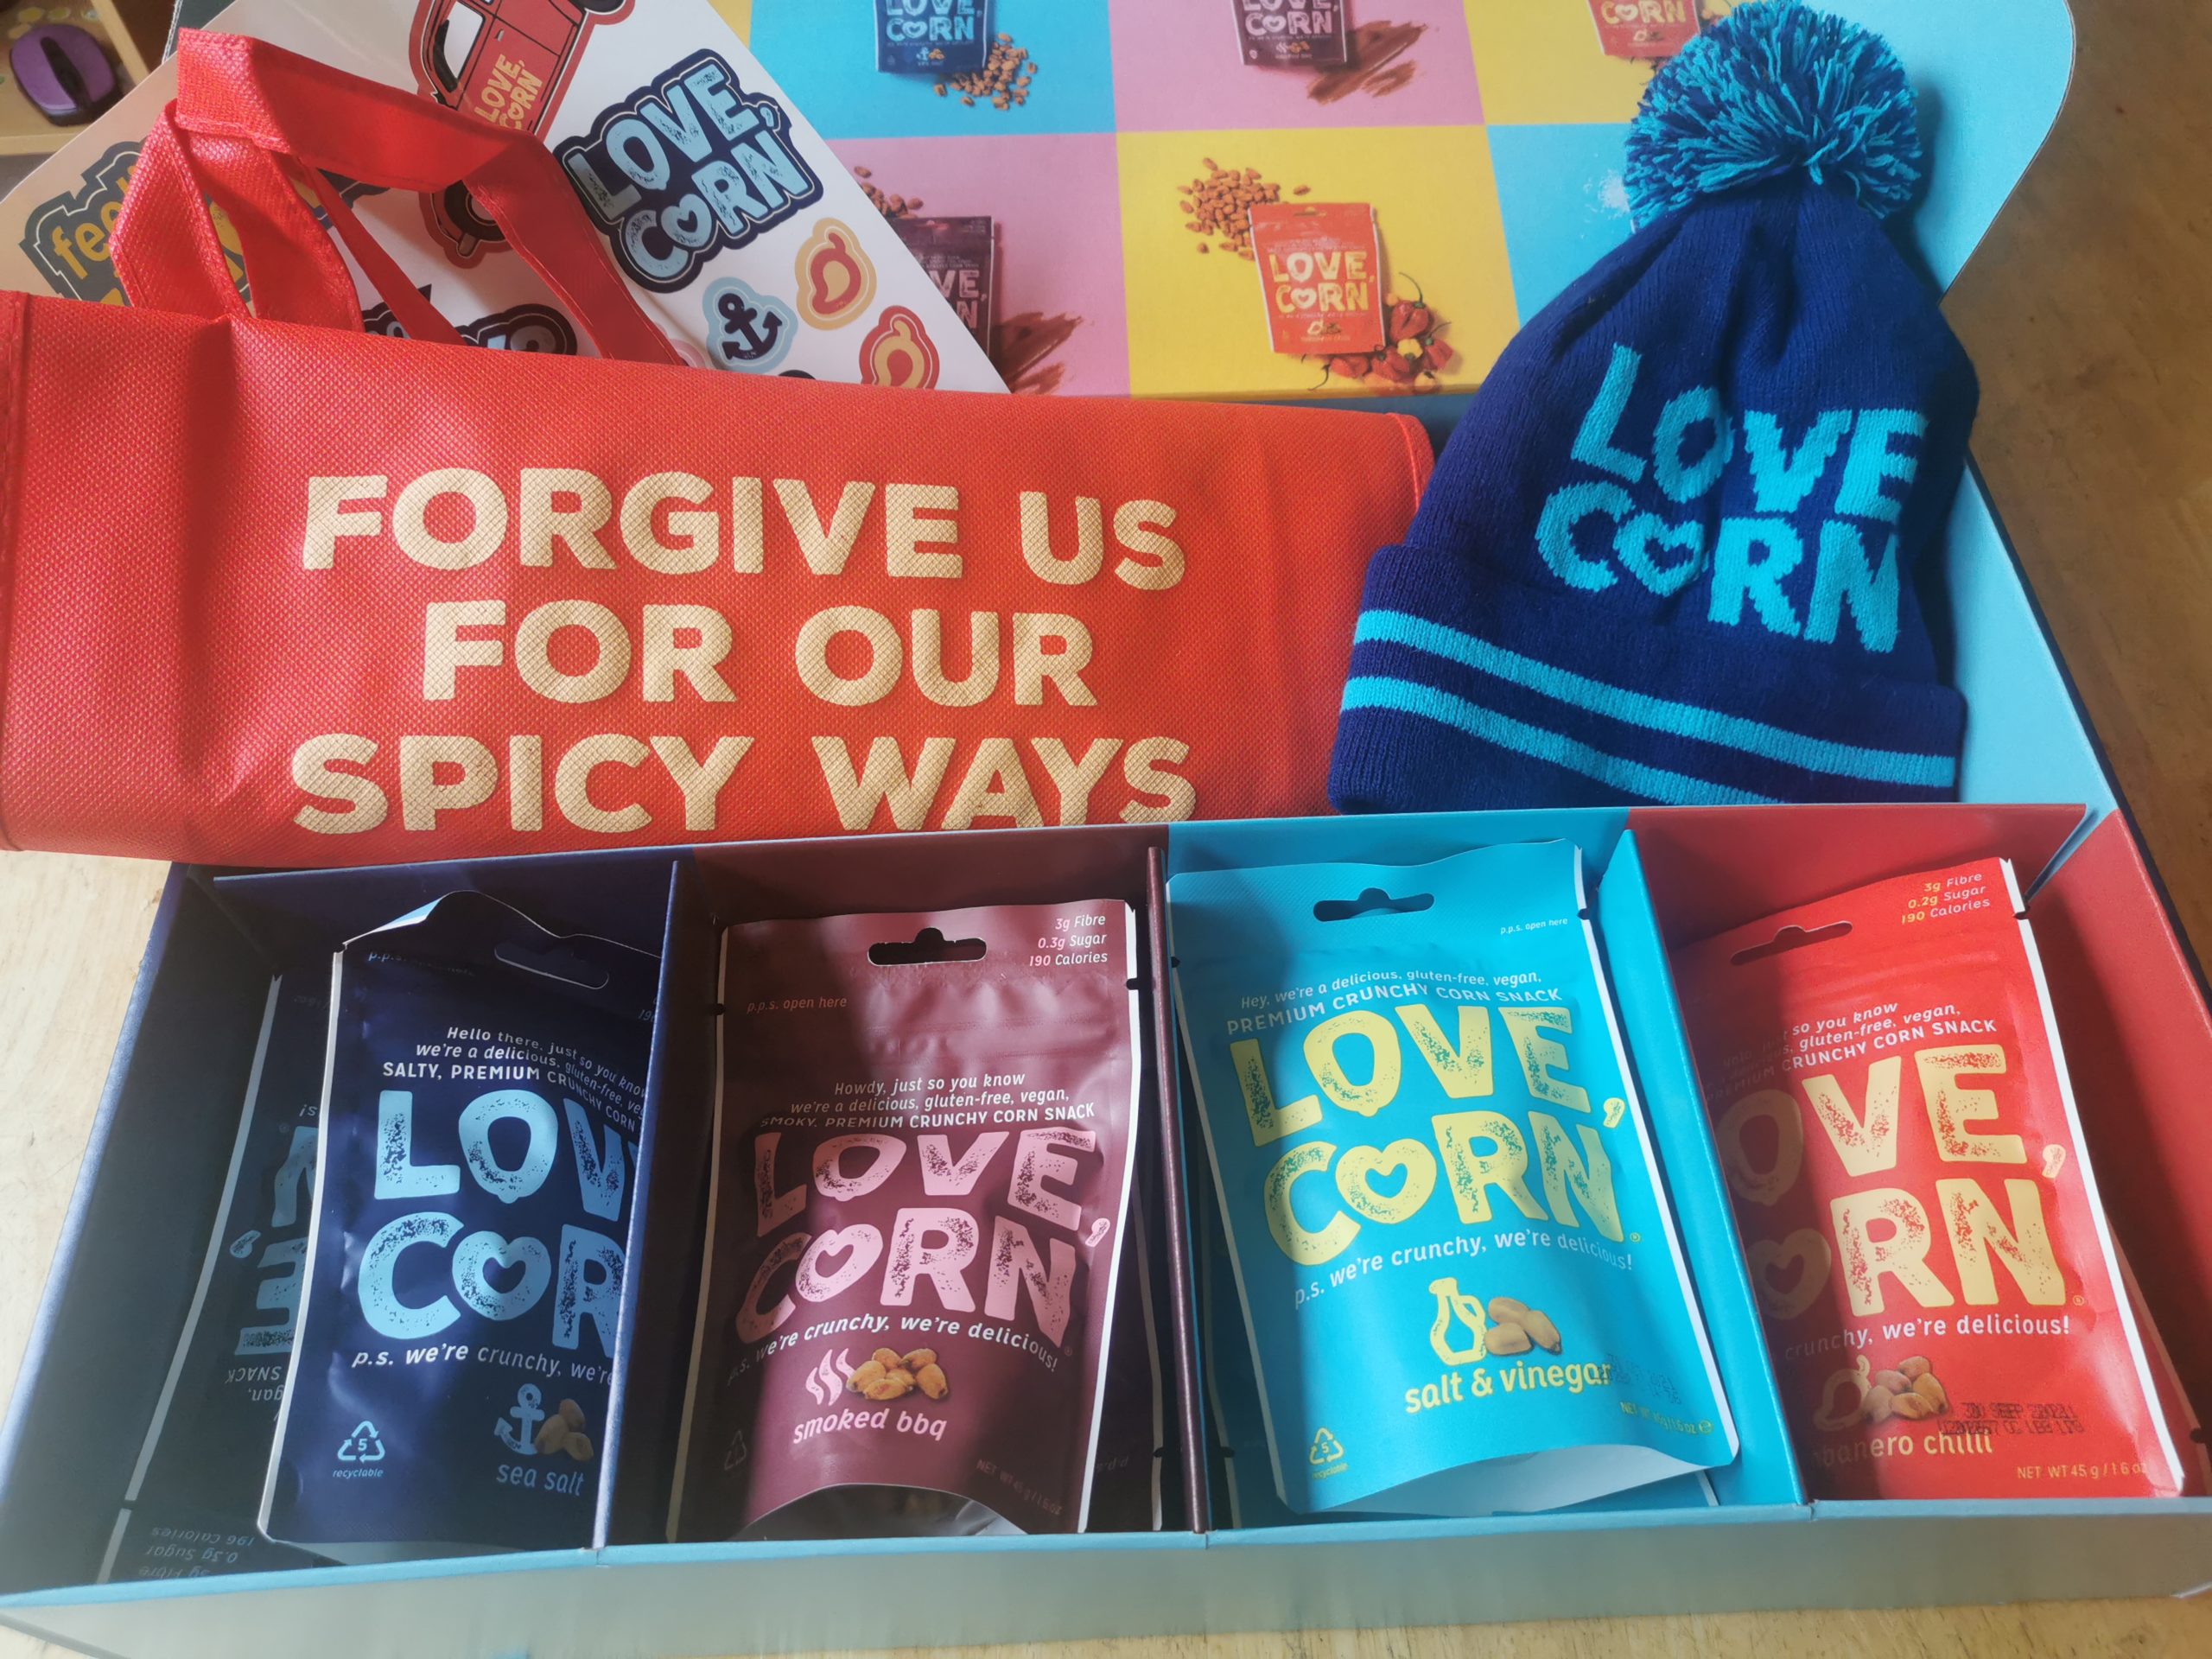 Box of Love Corn Goodies